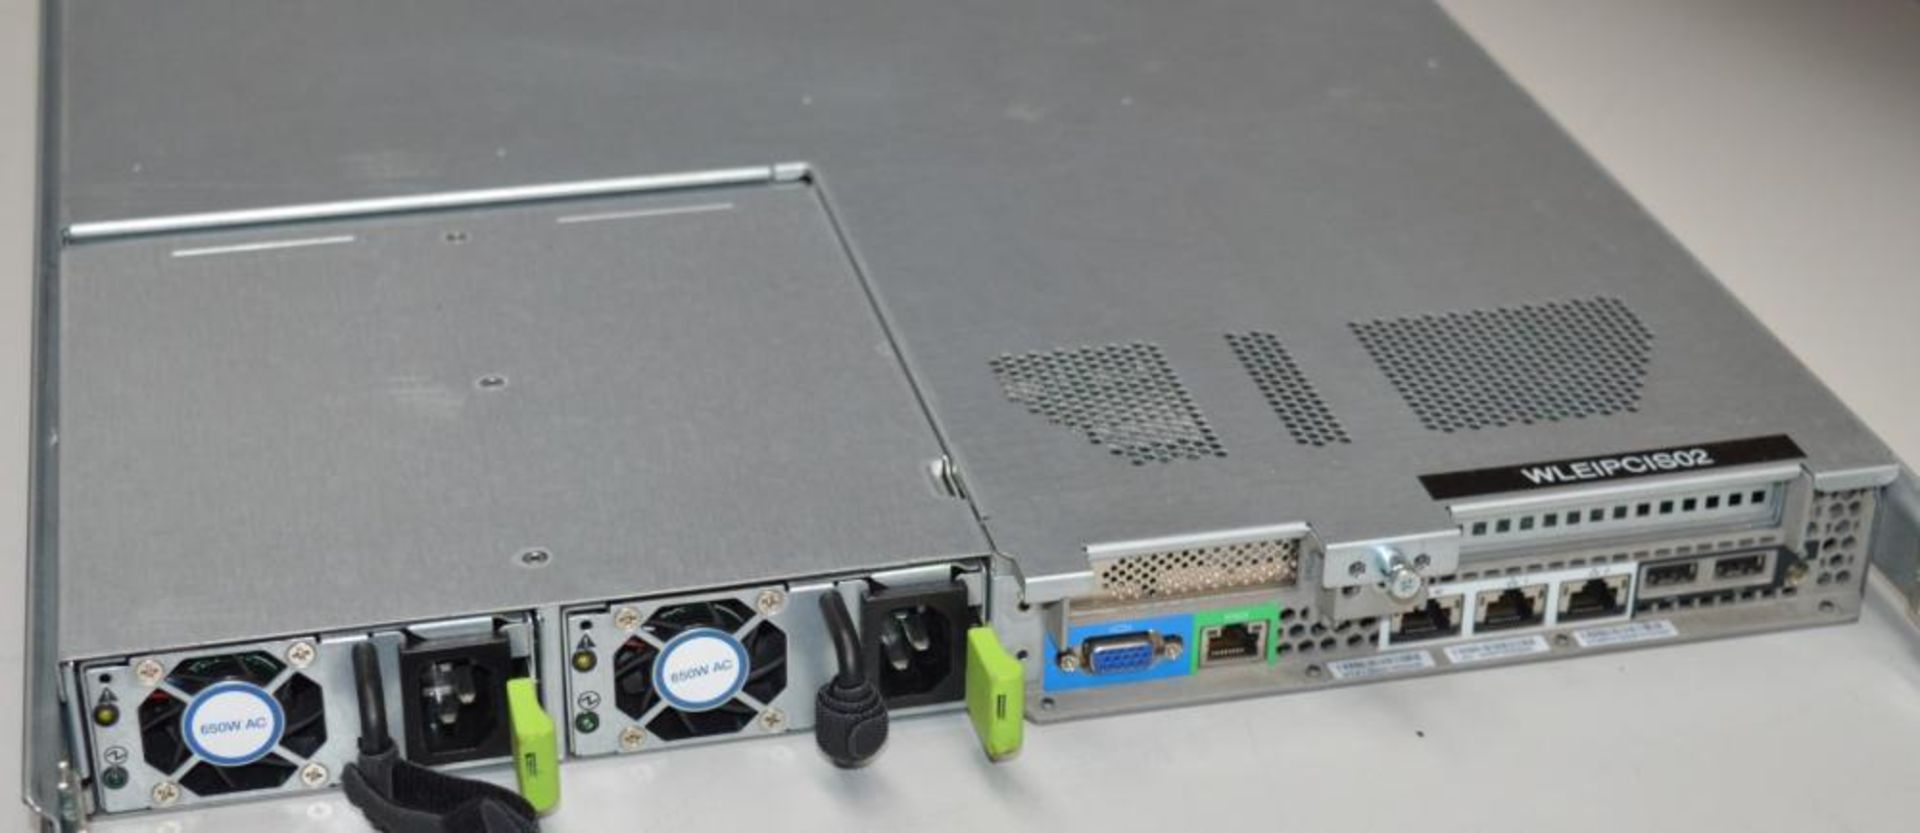 1 x Cisco UCS C220 M3 Server With Dual E5-2609 Quad Core Processors and 32gb Ram - Bild 5 aus 7